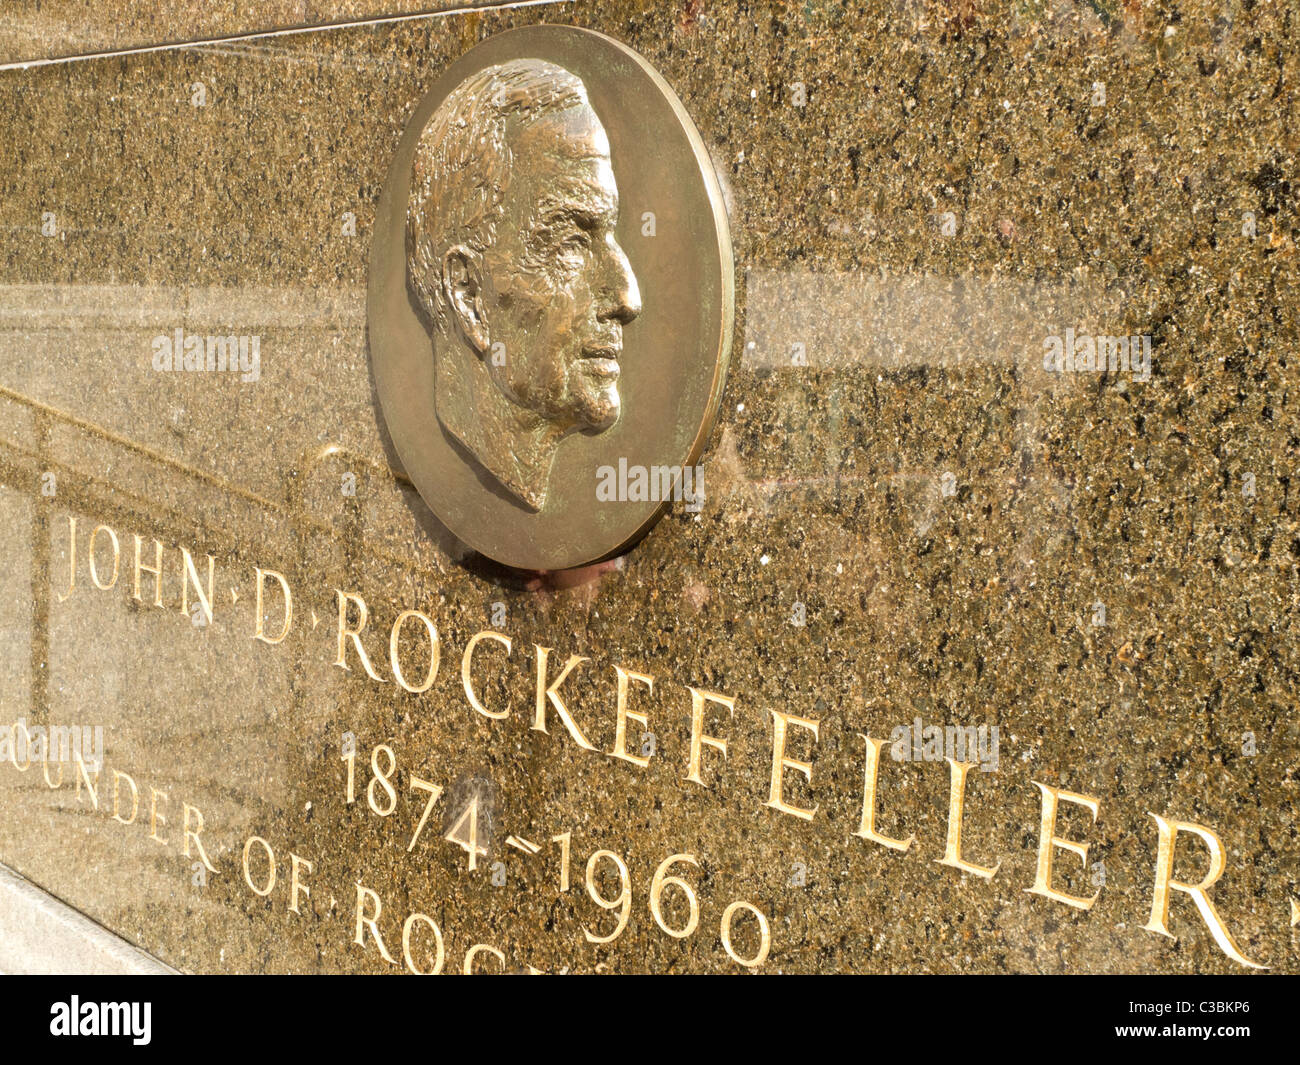 John D. Rockefeller, Jr. 1874-1960 by Everett